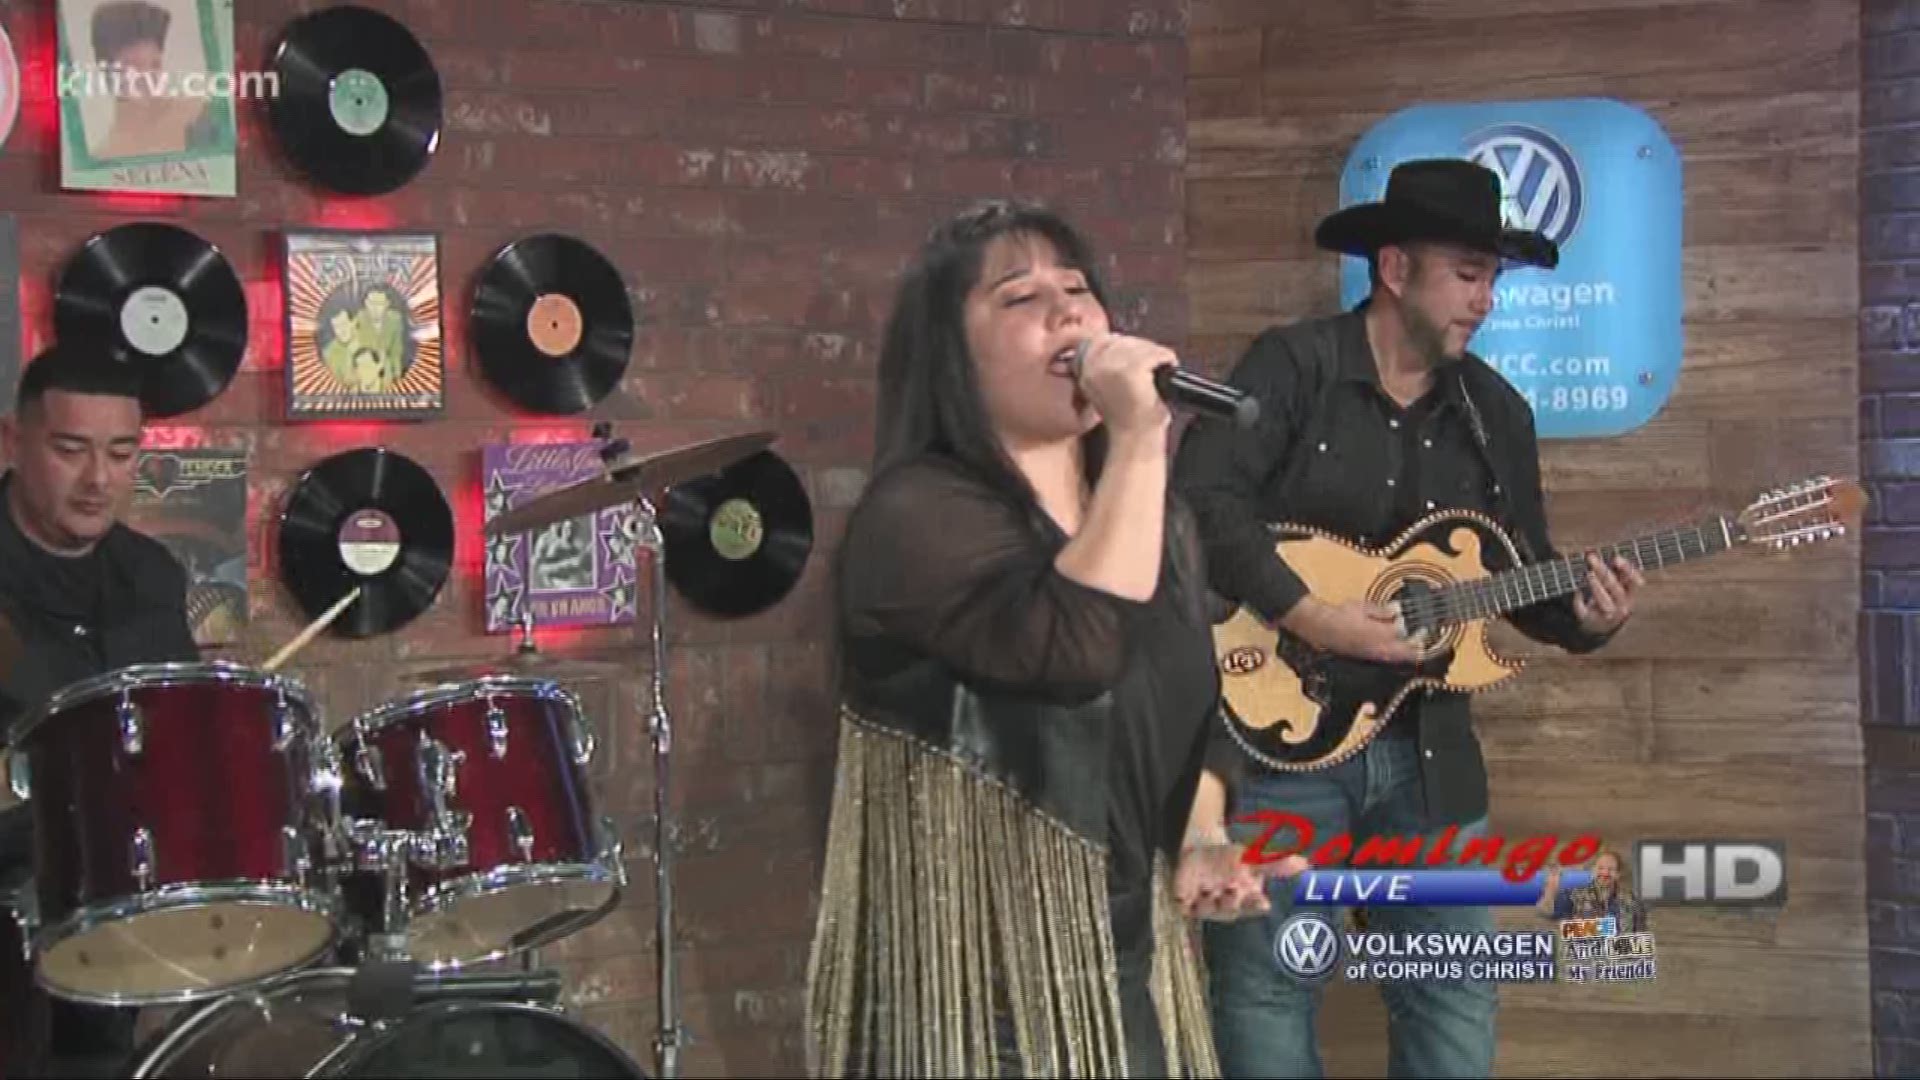 Sarah Monique performing "Costumbres" on Domingo Live.